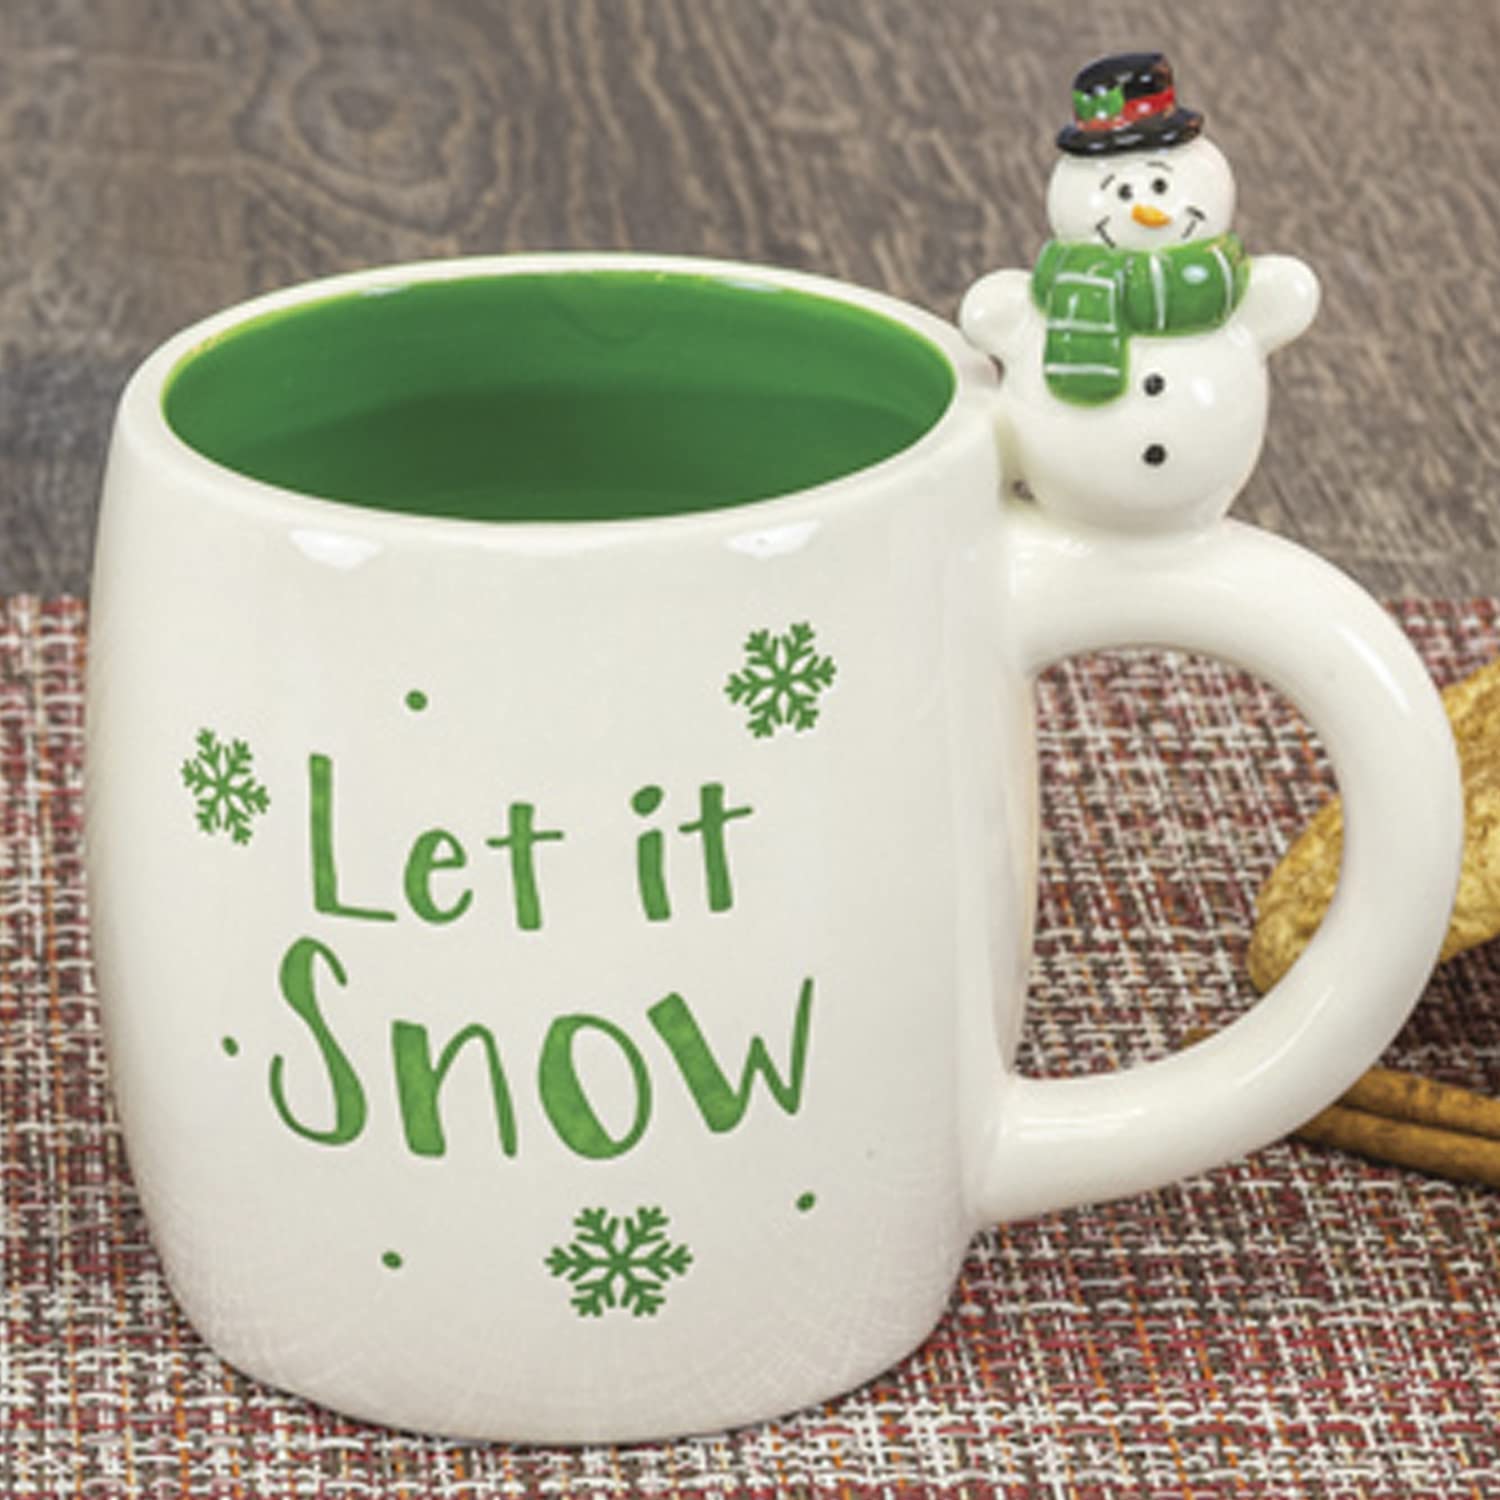 Iced Coffee Recipe - Funny Kitchen Decor Sign – Snowman Collector & Home  Decor